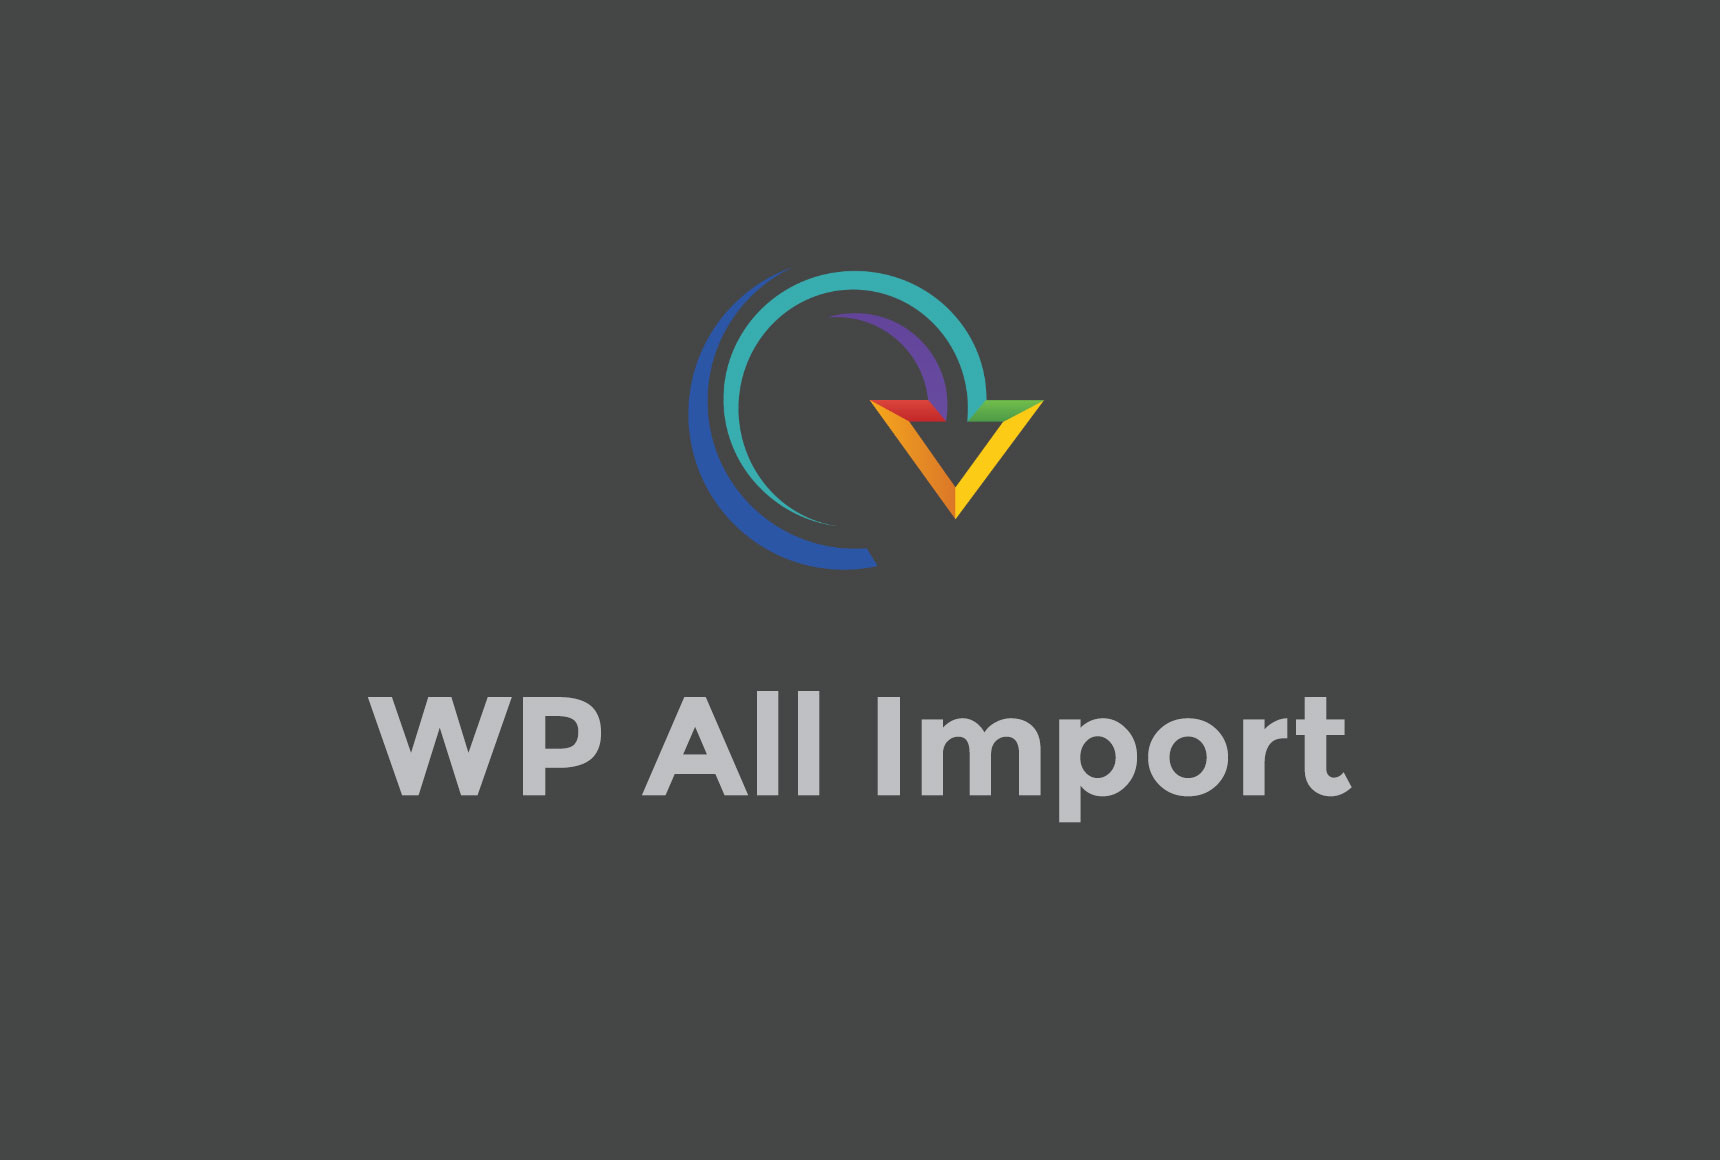 WP All Import masthead image